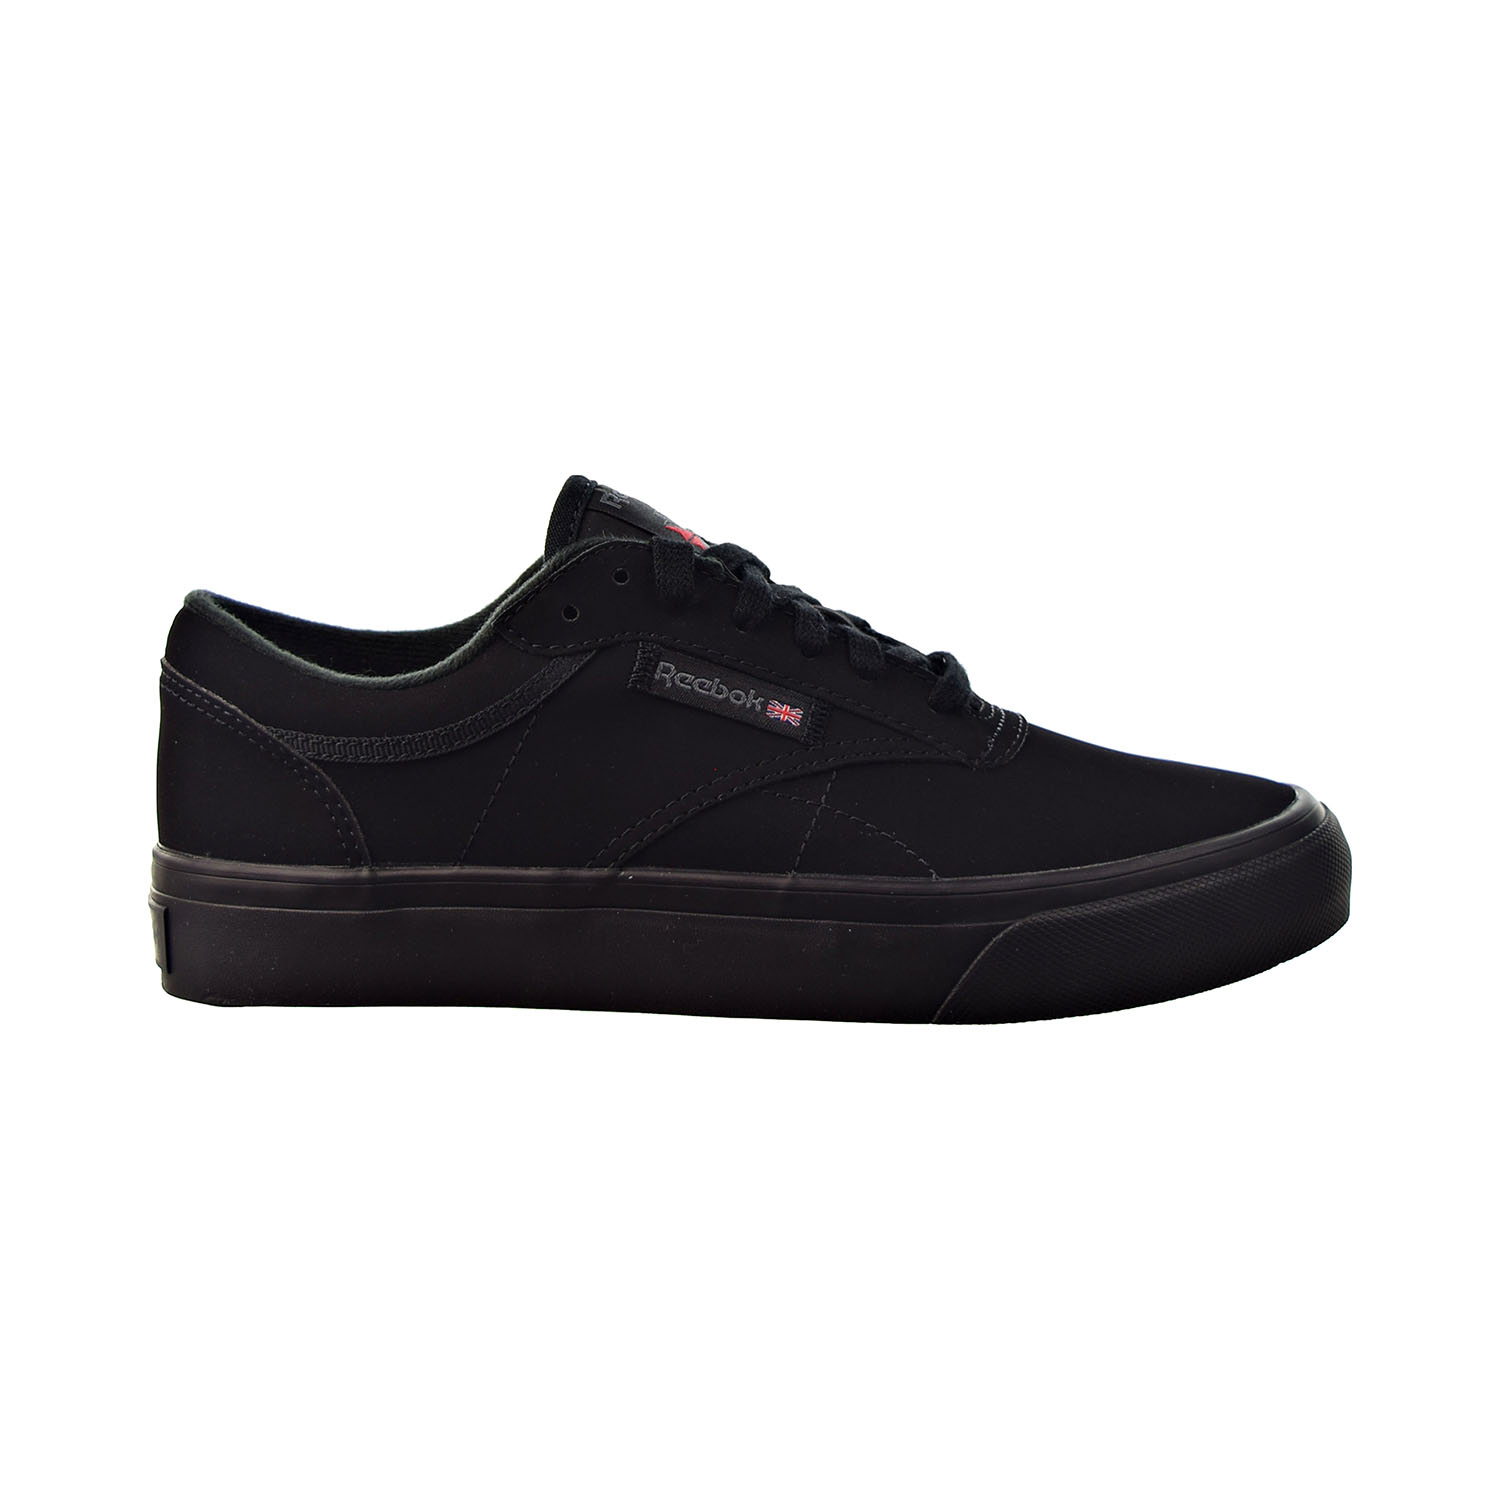 Reebok Club C Coast Men's Shoes Black-White-Reebok Rubber Gum-05 g57851 (6 M US)